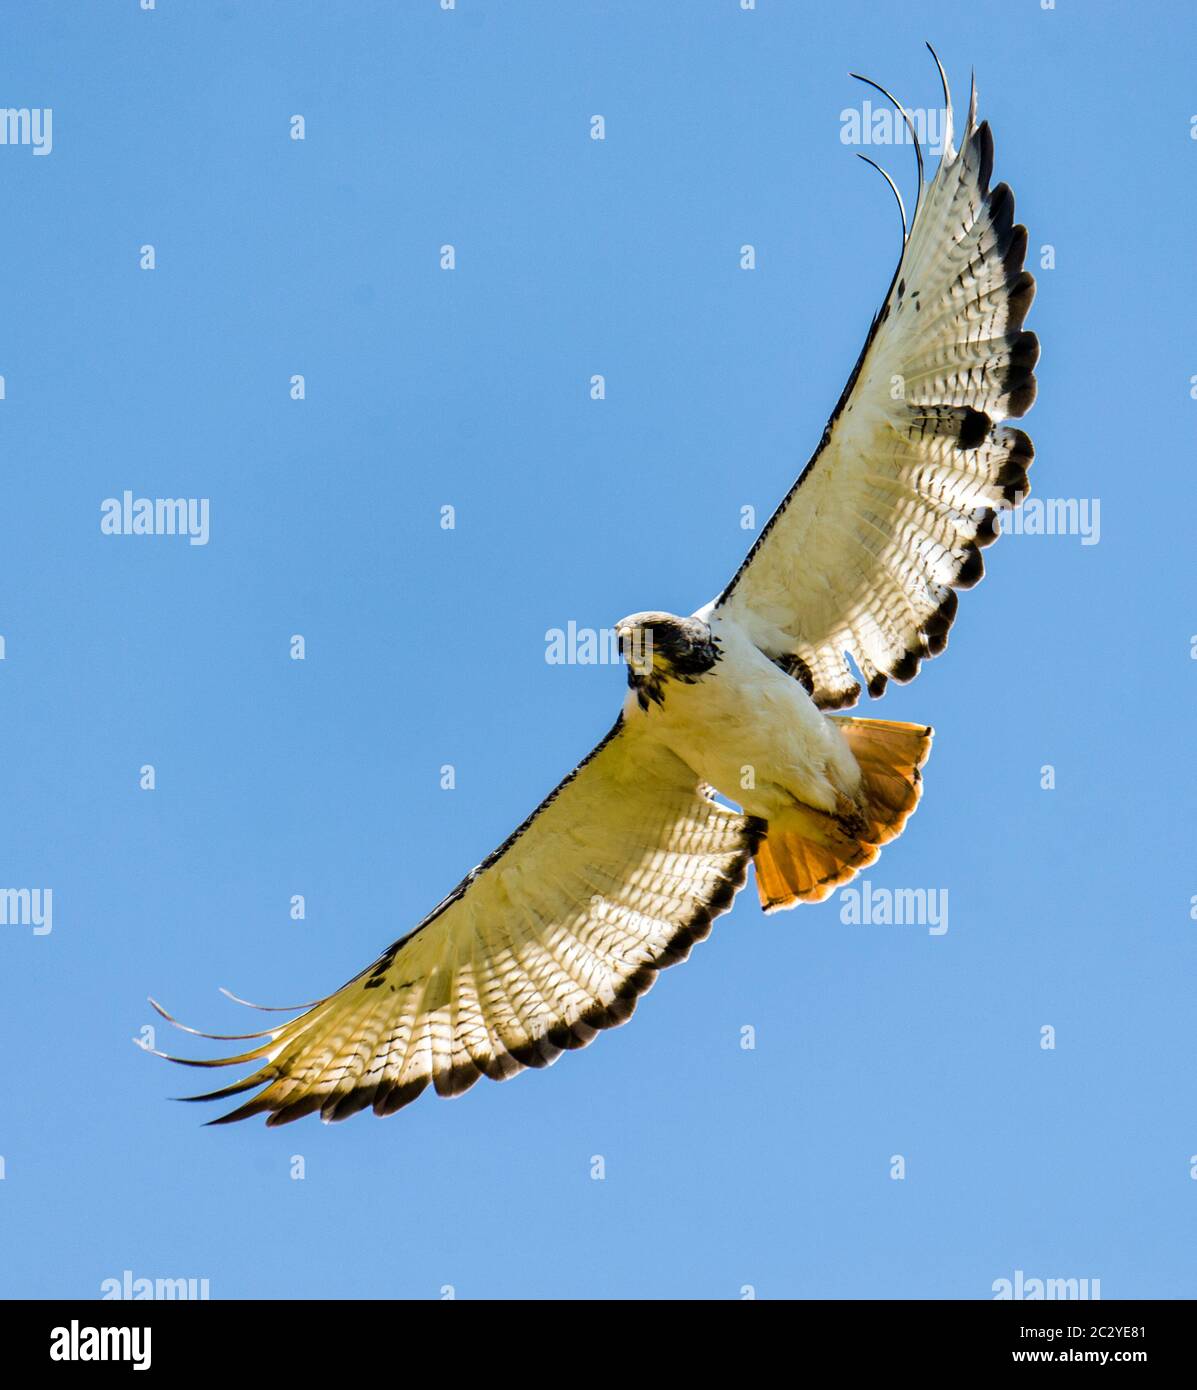 Flying augur buzzard (Buteo augur) against blue sky, Ngorongoro Crater, Tanzania, Africa Stock Photo